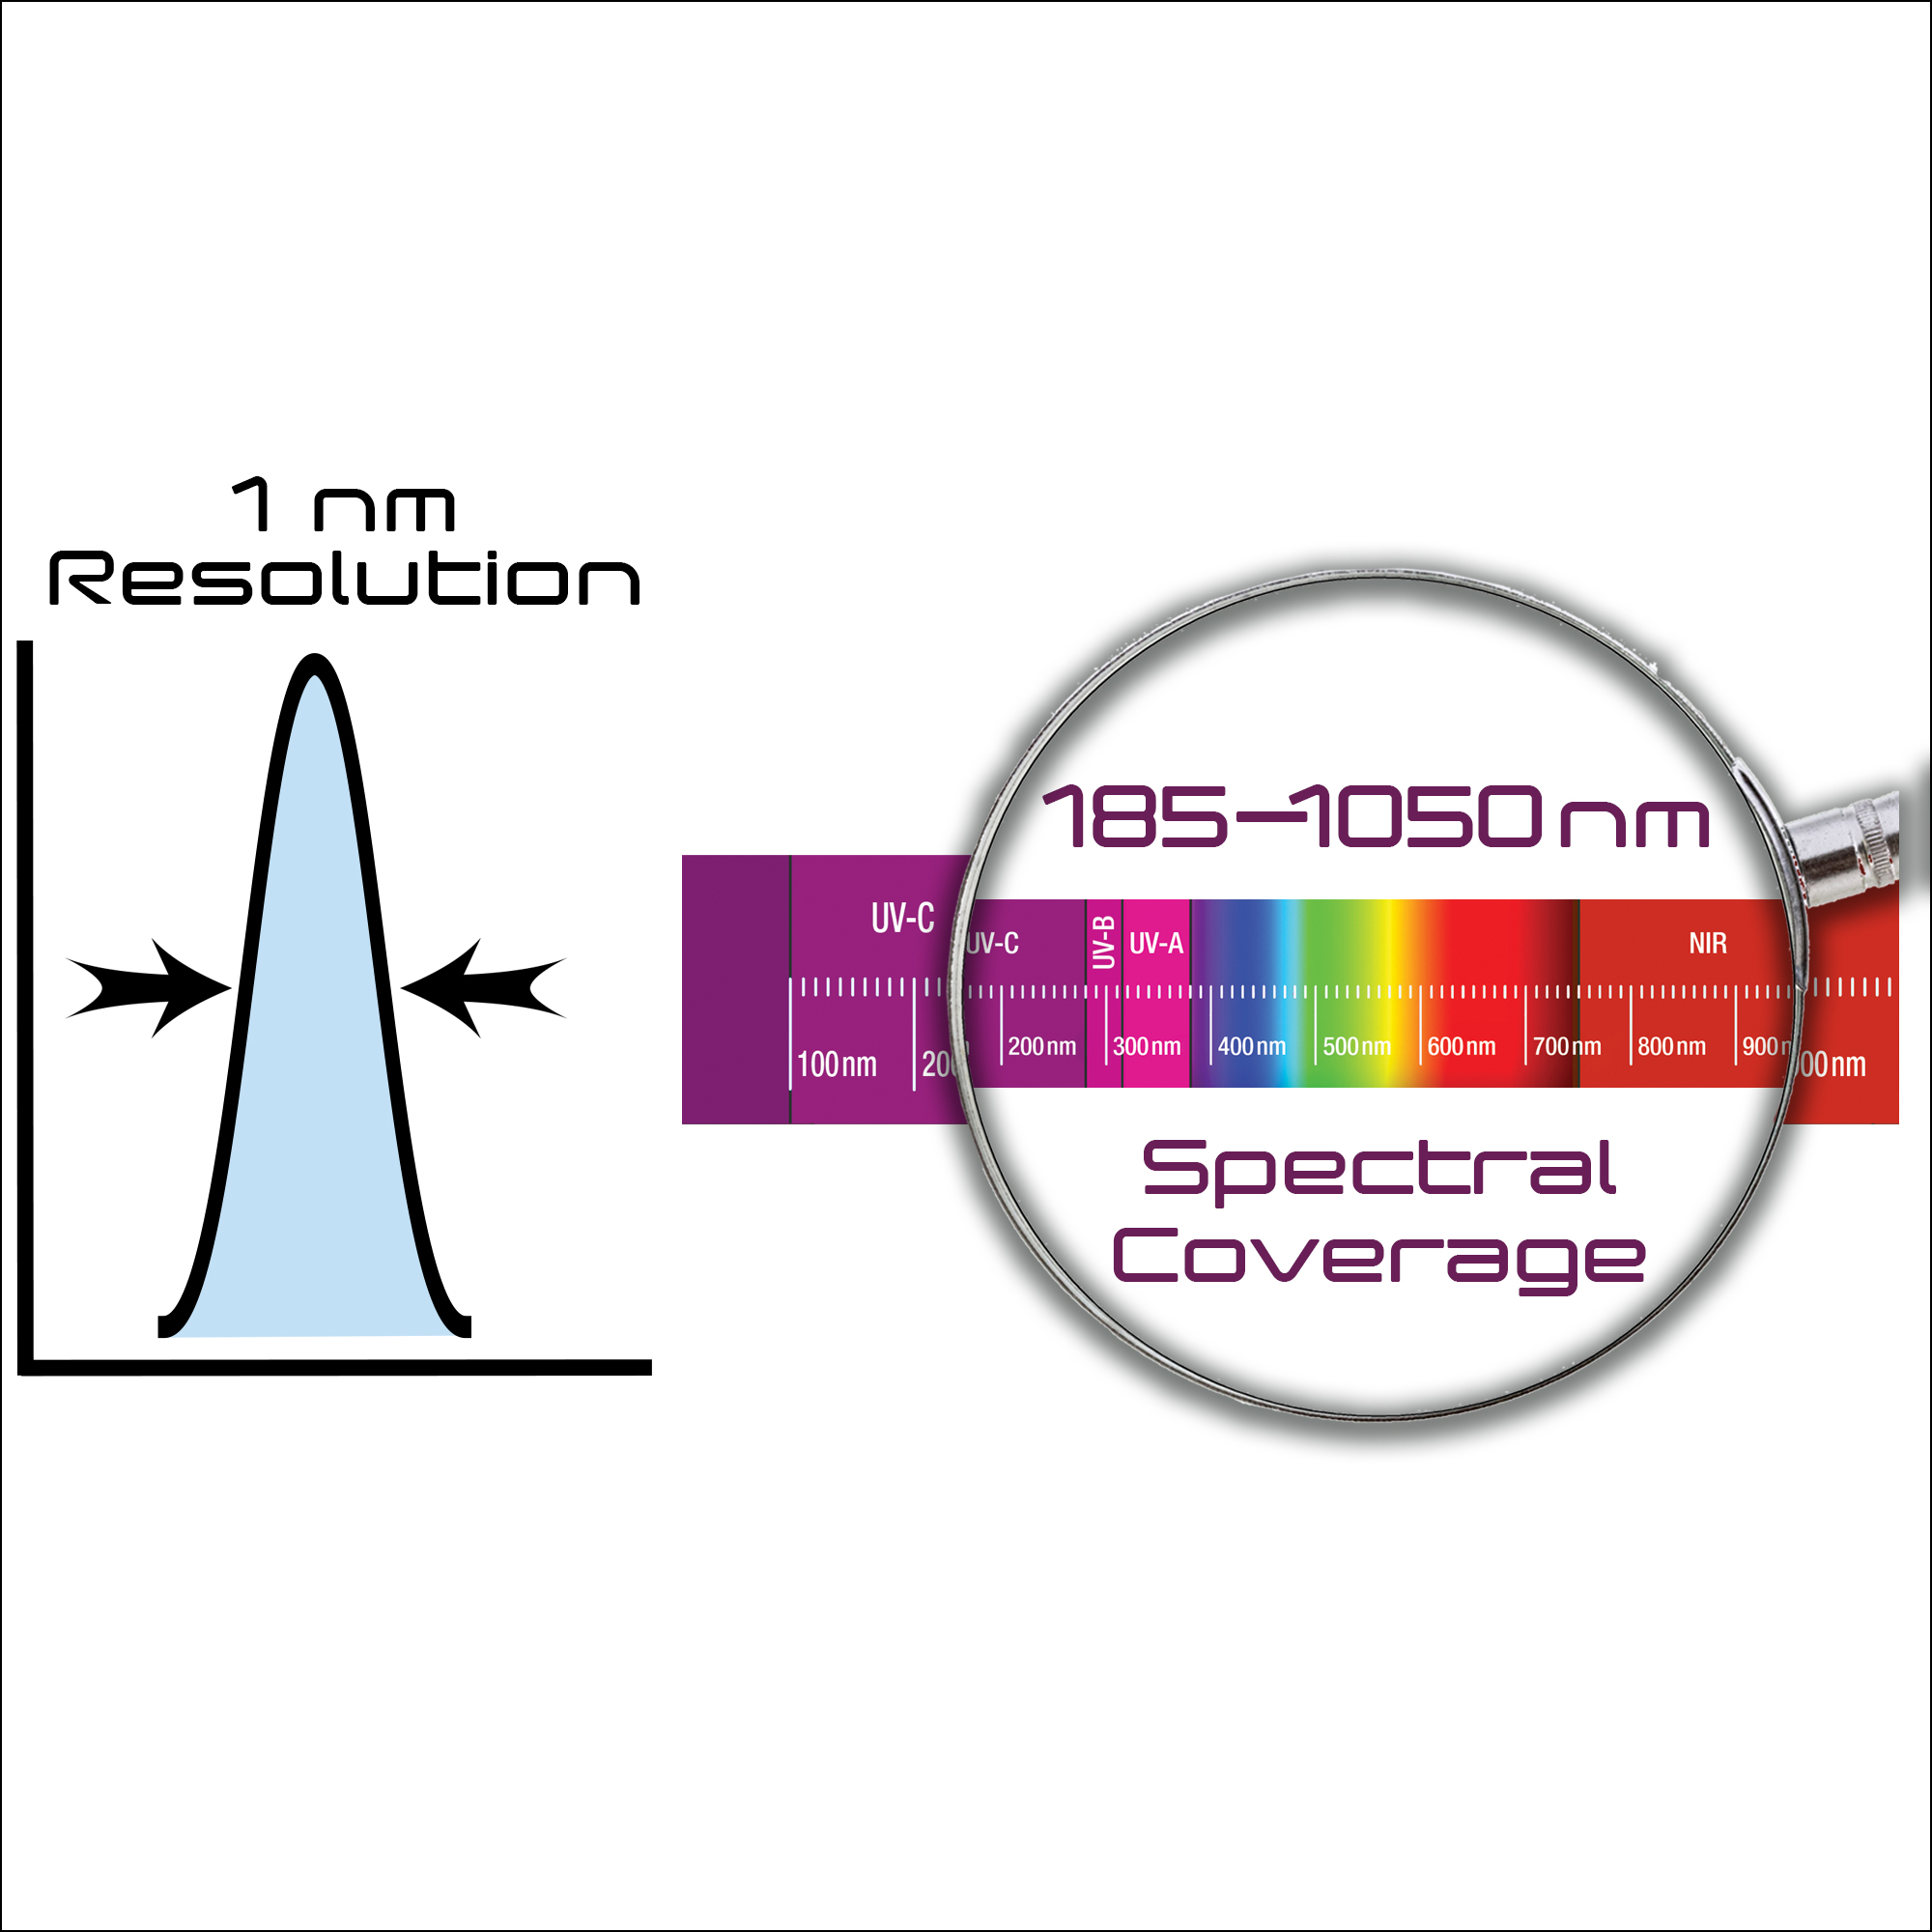 PoliSpectra multifiber spectrometer